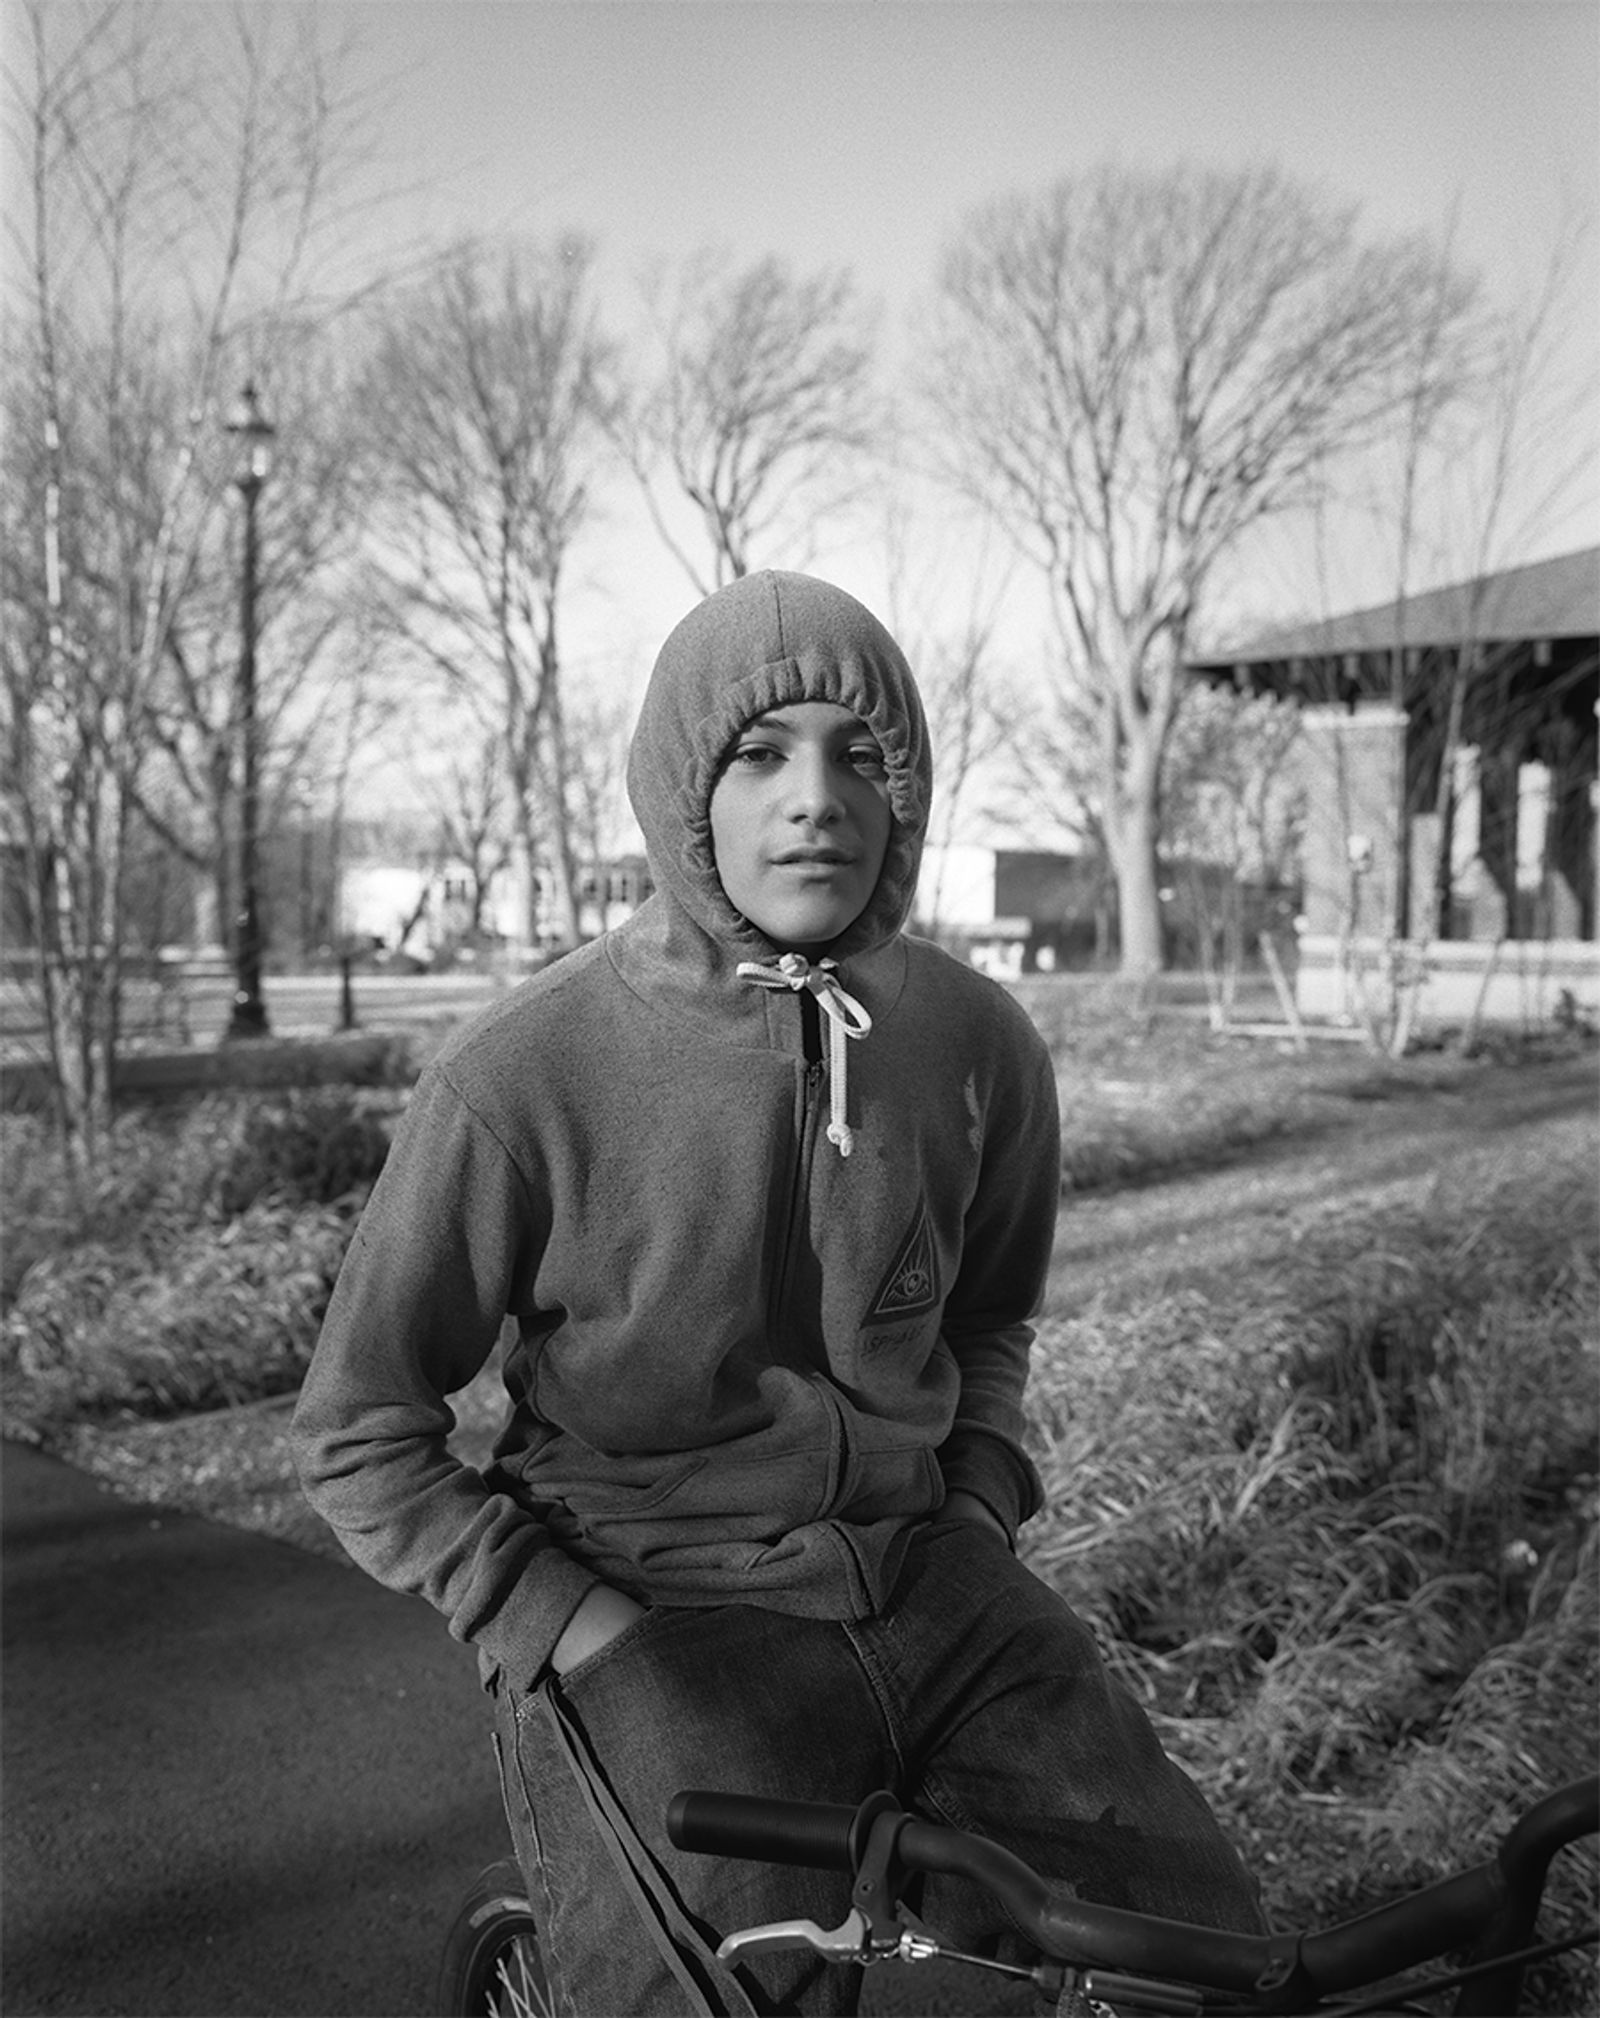 © Nicholas Pollack - Boy on bike, Branch Brook Park, Newark, New Jersey, 2014. Scan of 6x7 film negative.